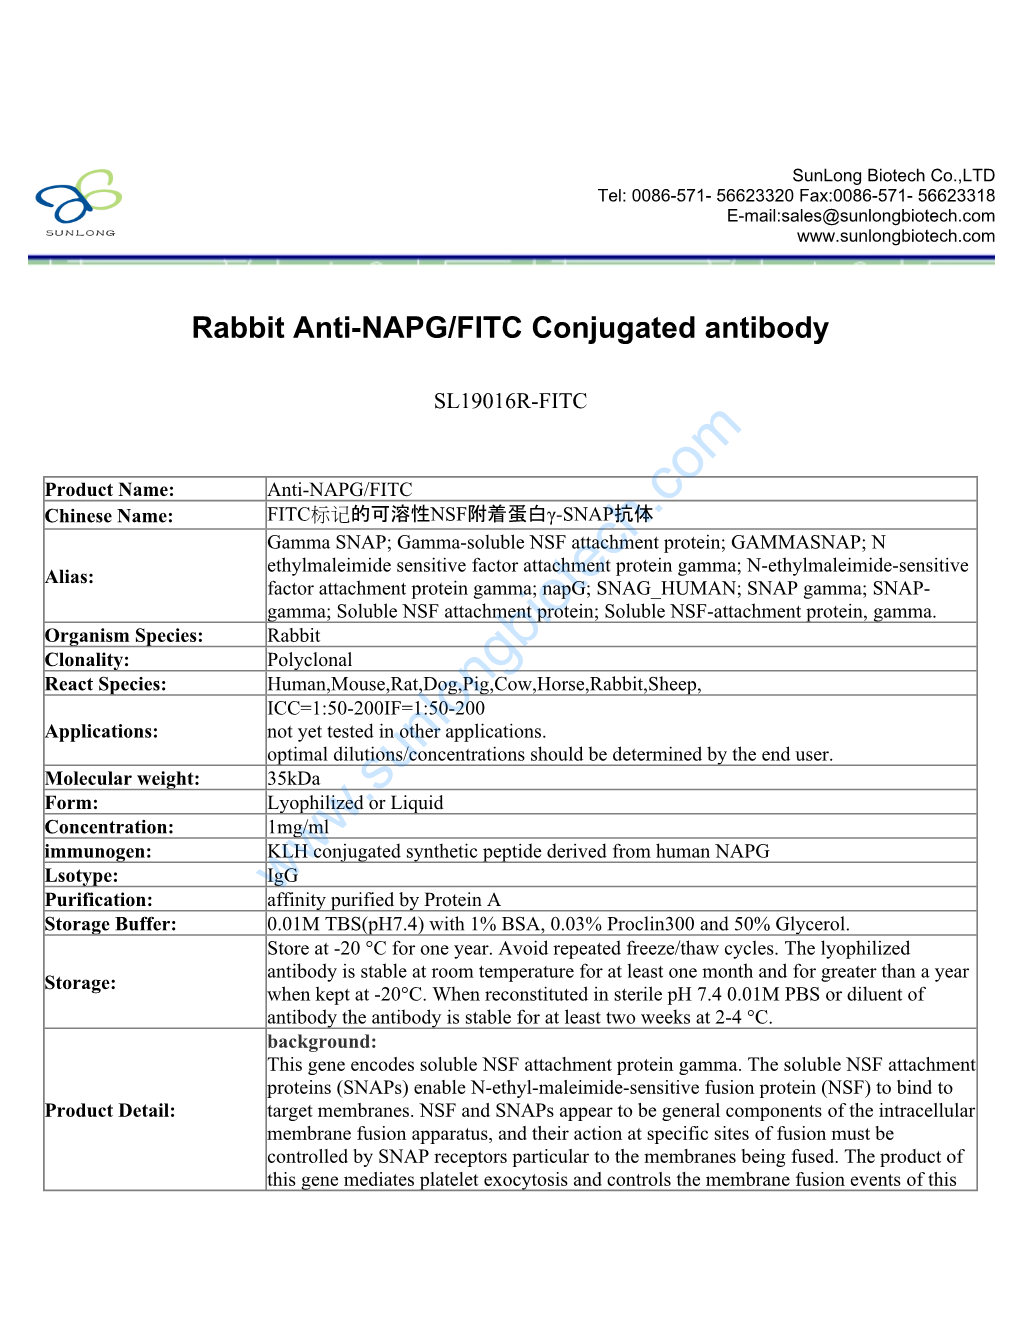 Rabbit Anti-NAPG/FITC Conjugated Antibody-SL19016R-FITC